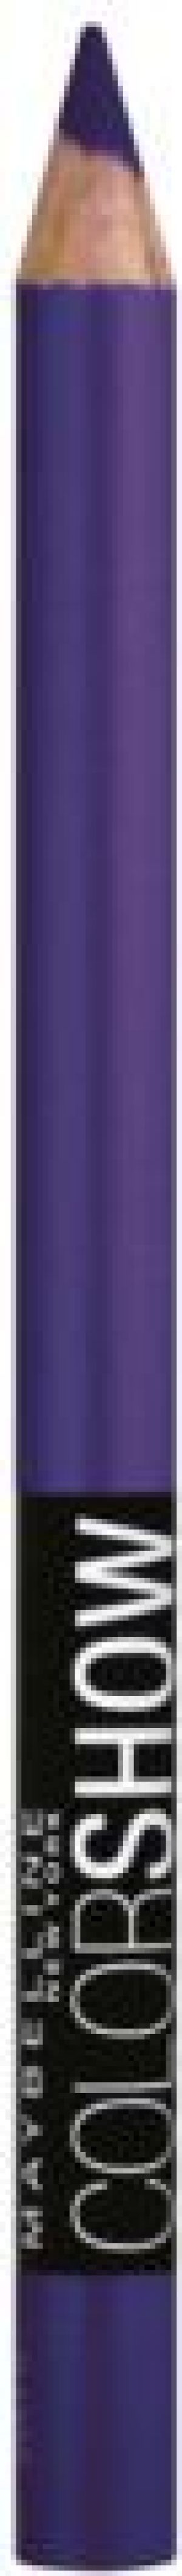 Maybelline  Color Show Khol Eyeliner kredka do oczu 320 Vibrant Violet 1.2g 1